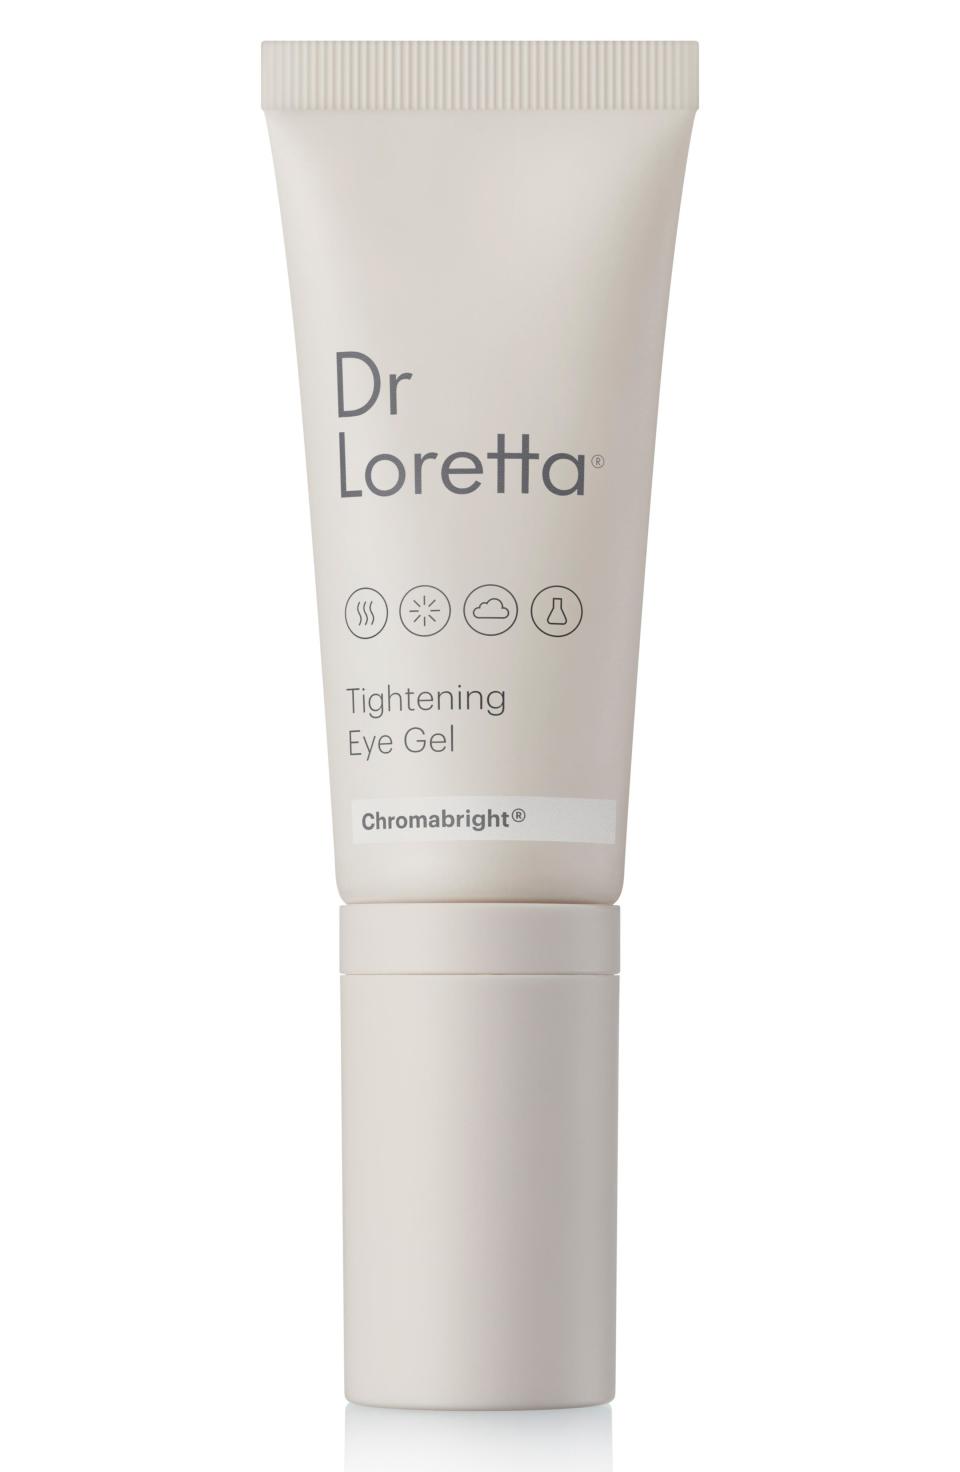 8) Dr. Loretta Tightening Eye Gel